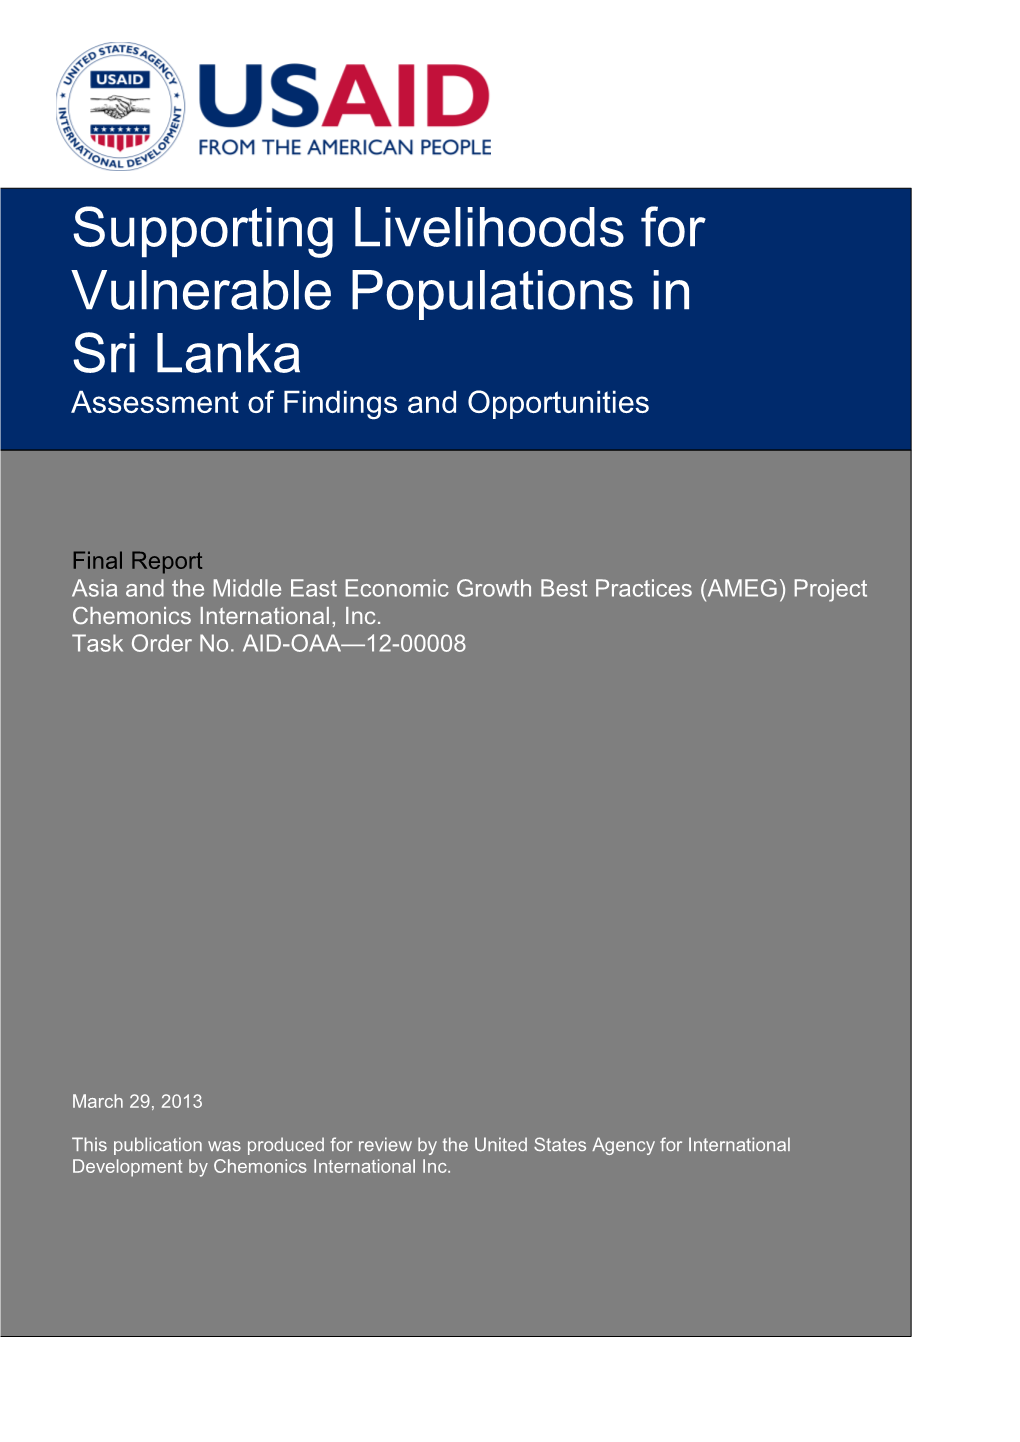 Supporting Livelihoods for Vulnerable Populations in Sri Lanka